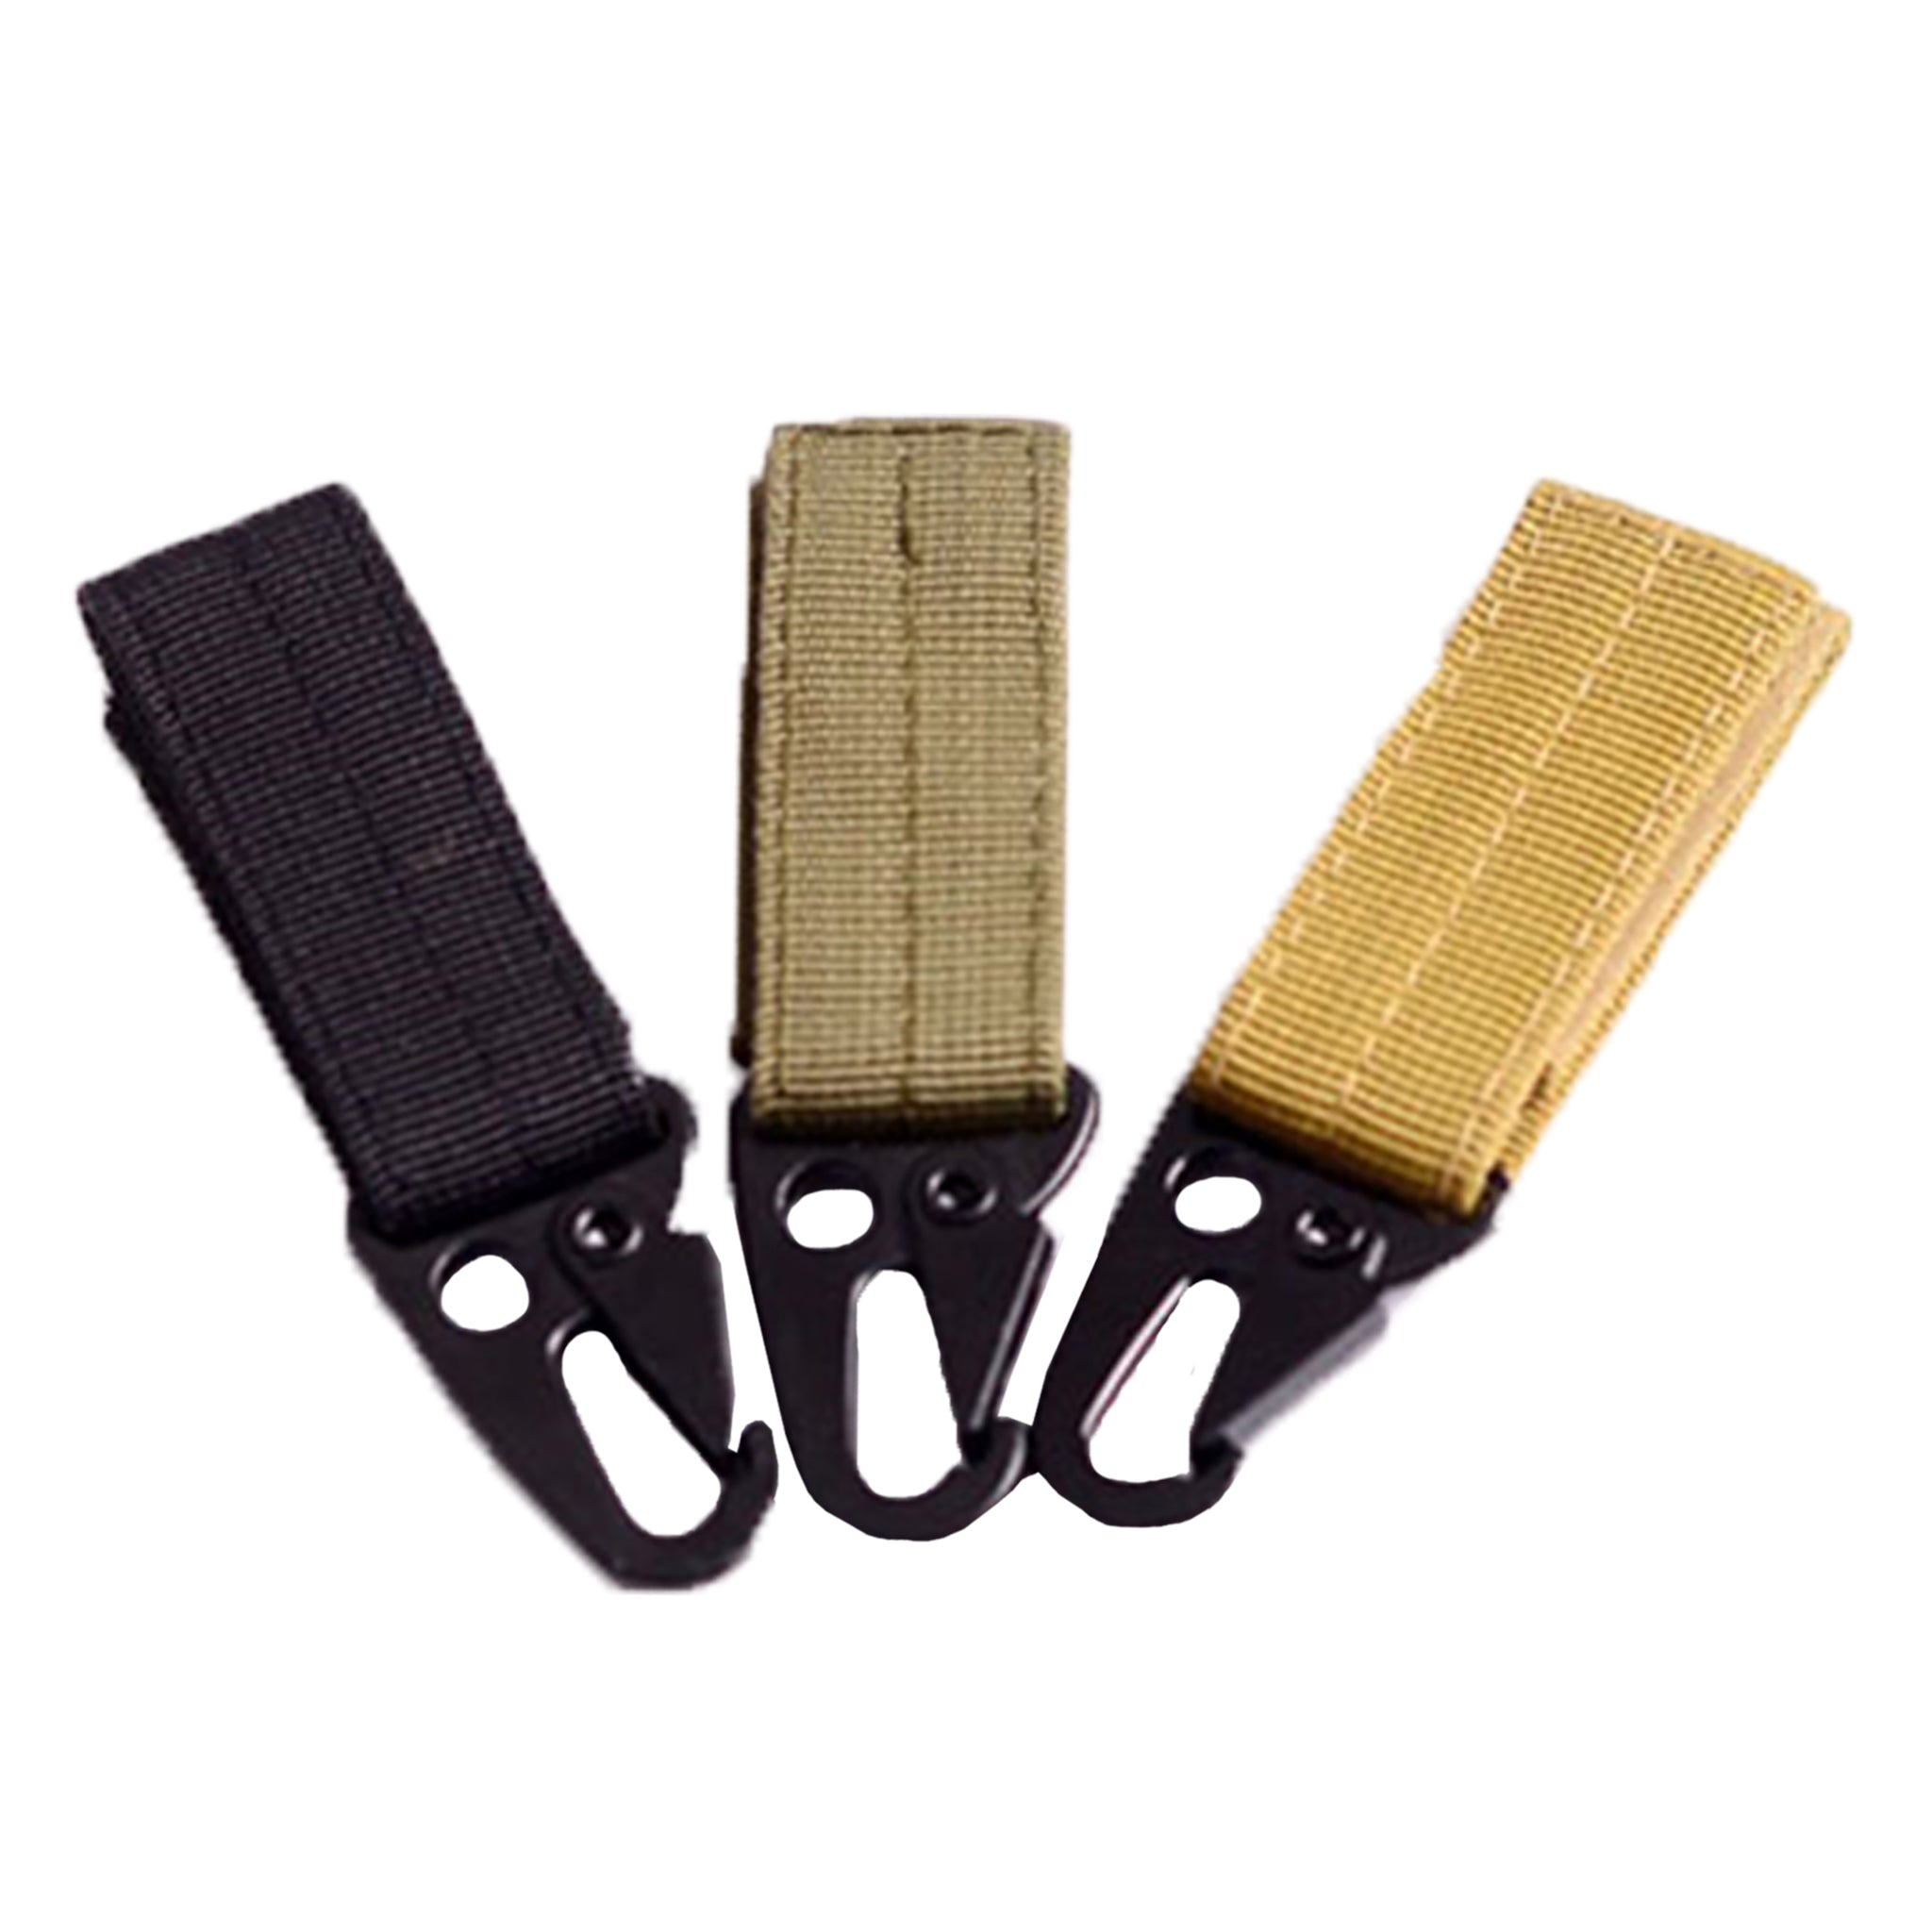 Gyala - Carabiner clip | Carabiner bush craft clip | Carabiner Hook